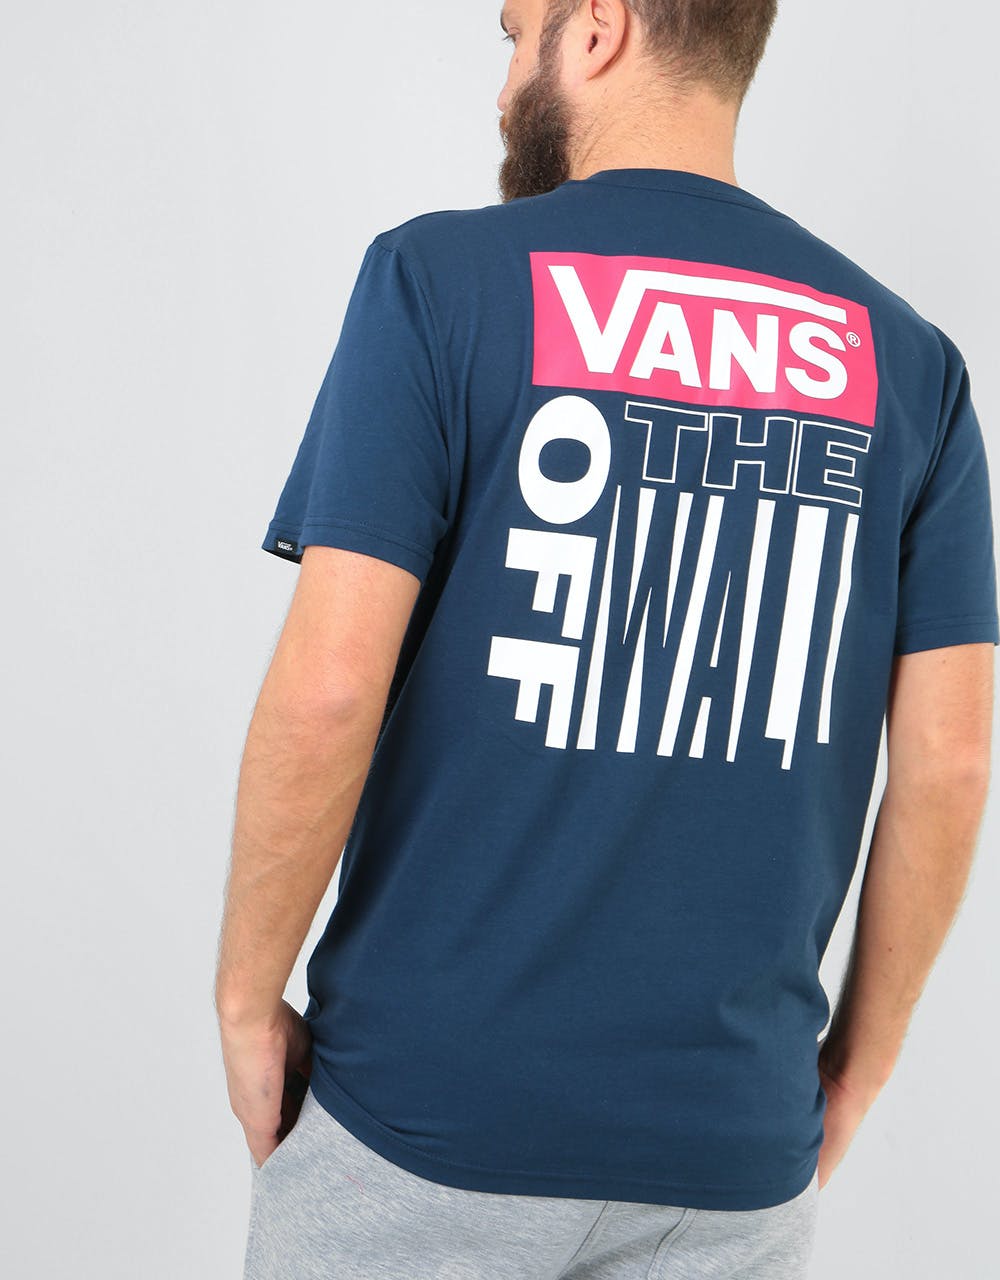 Vans Retro Tall Type T-Shirt - Dress Blues